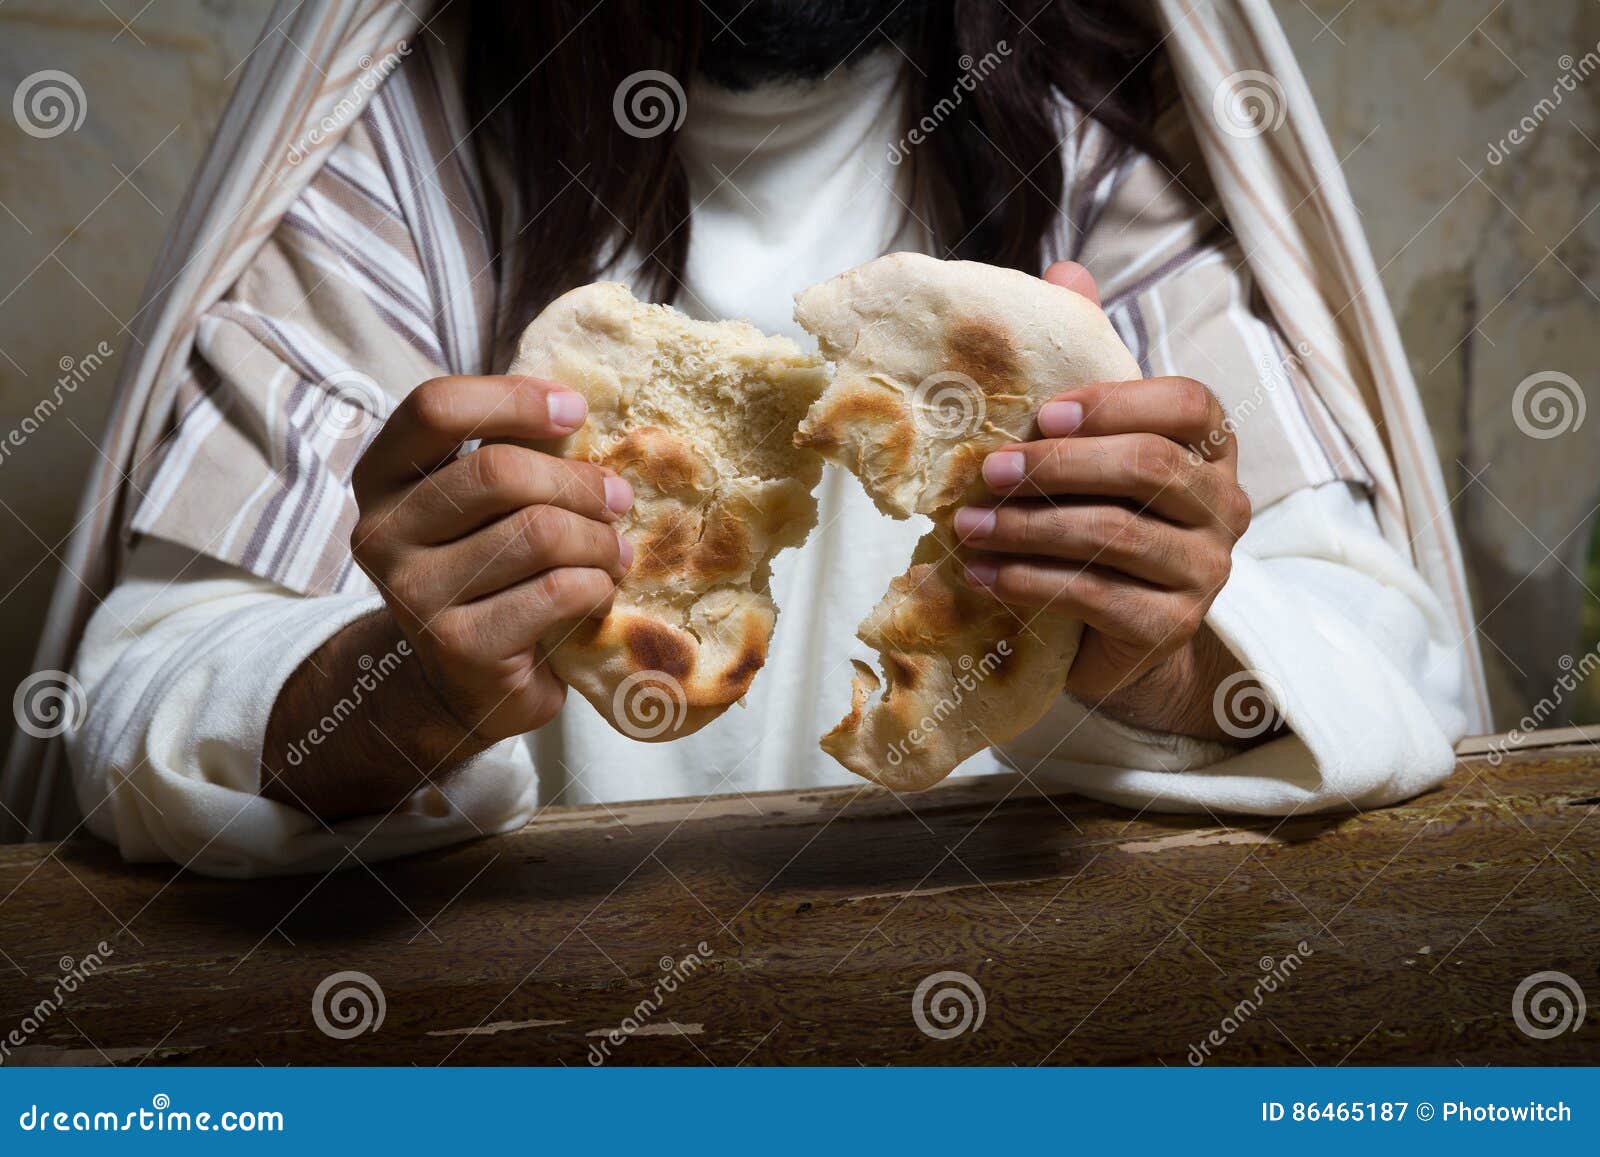 last supper in jerusalem